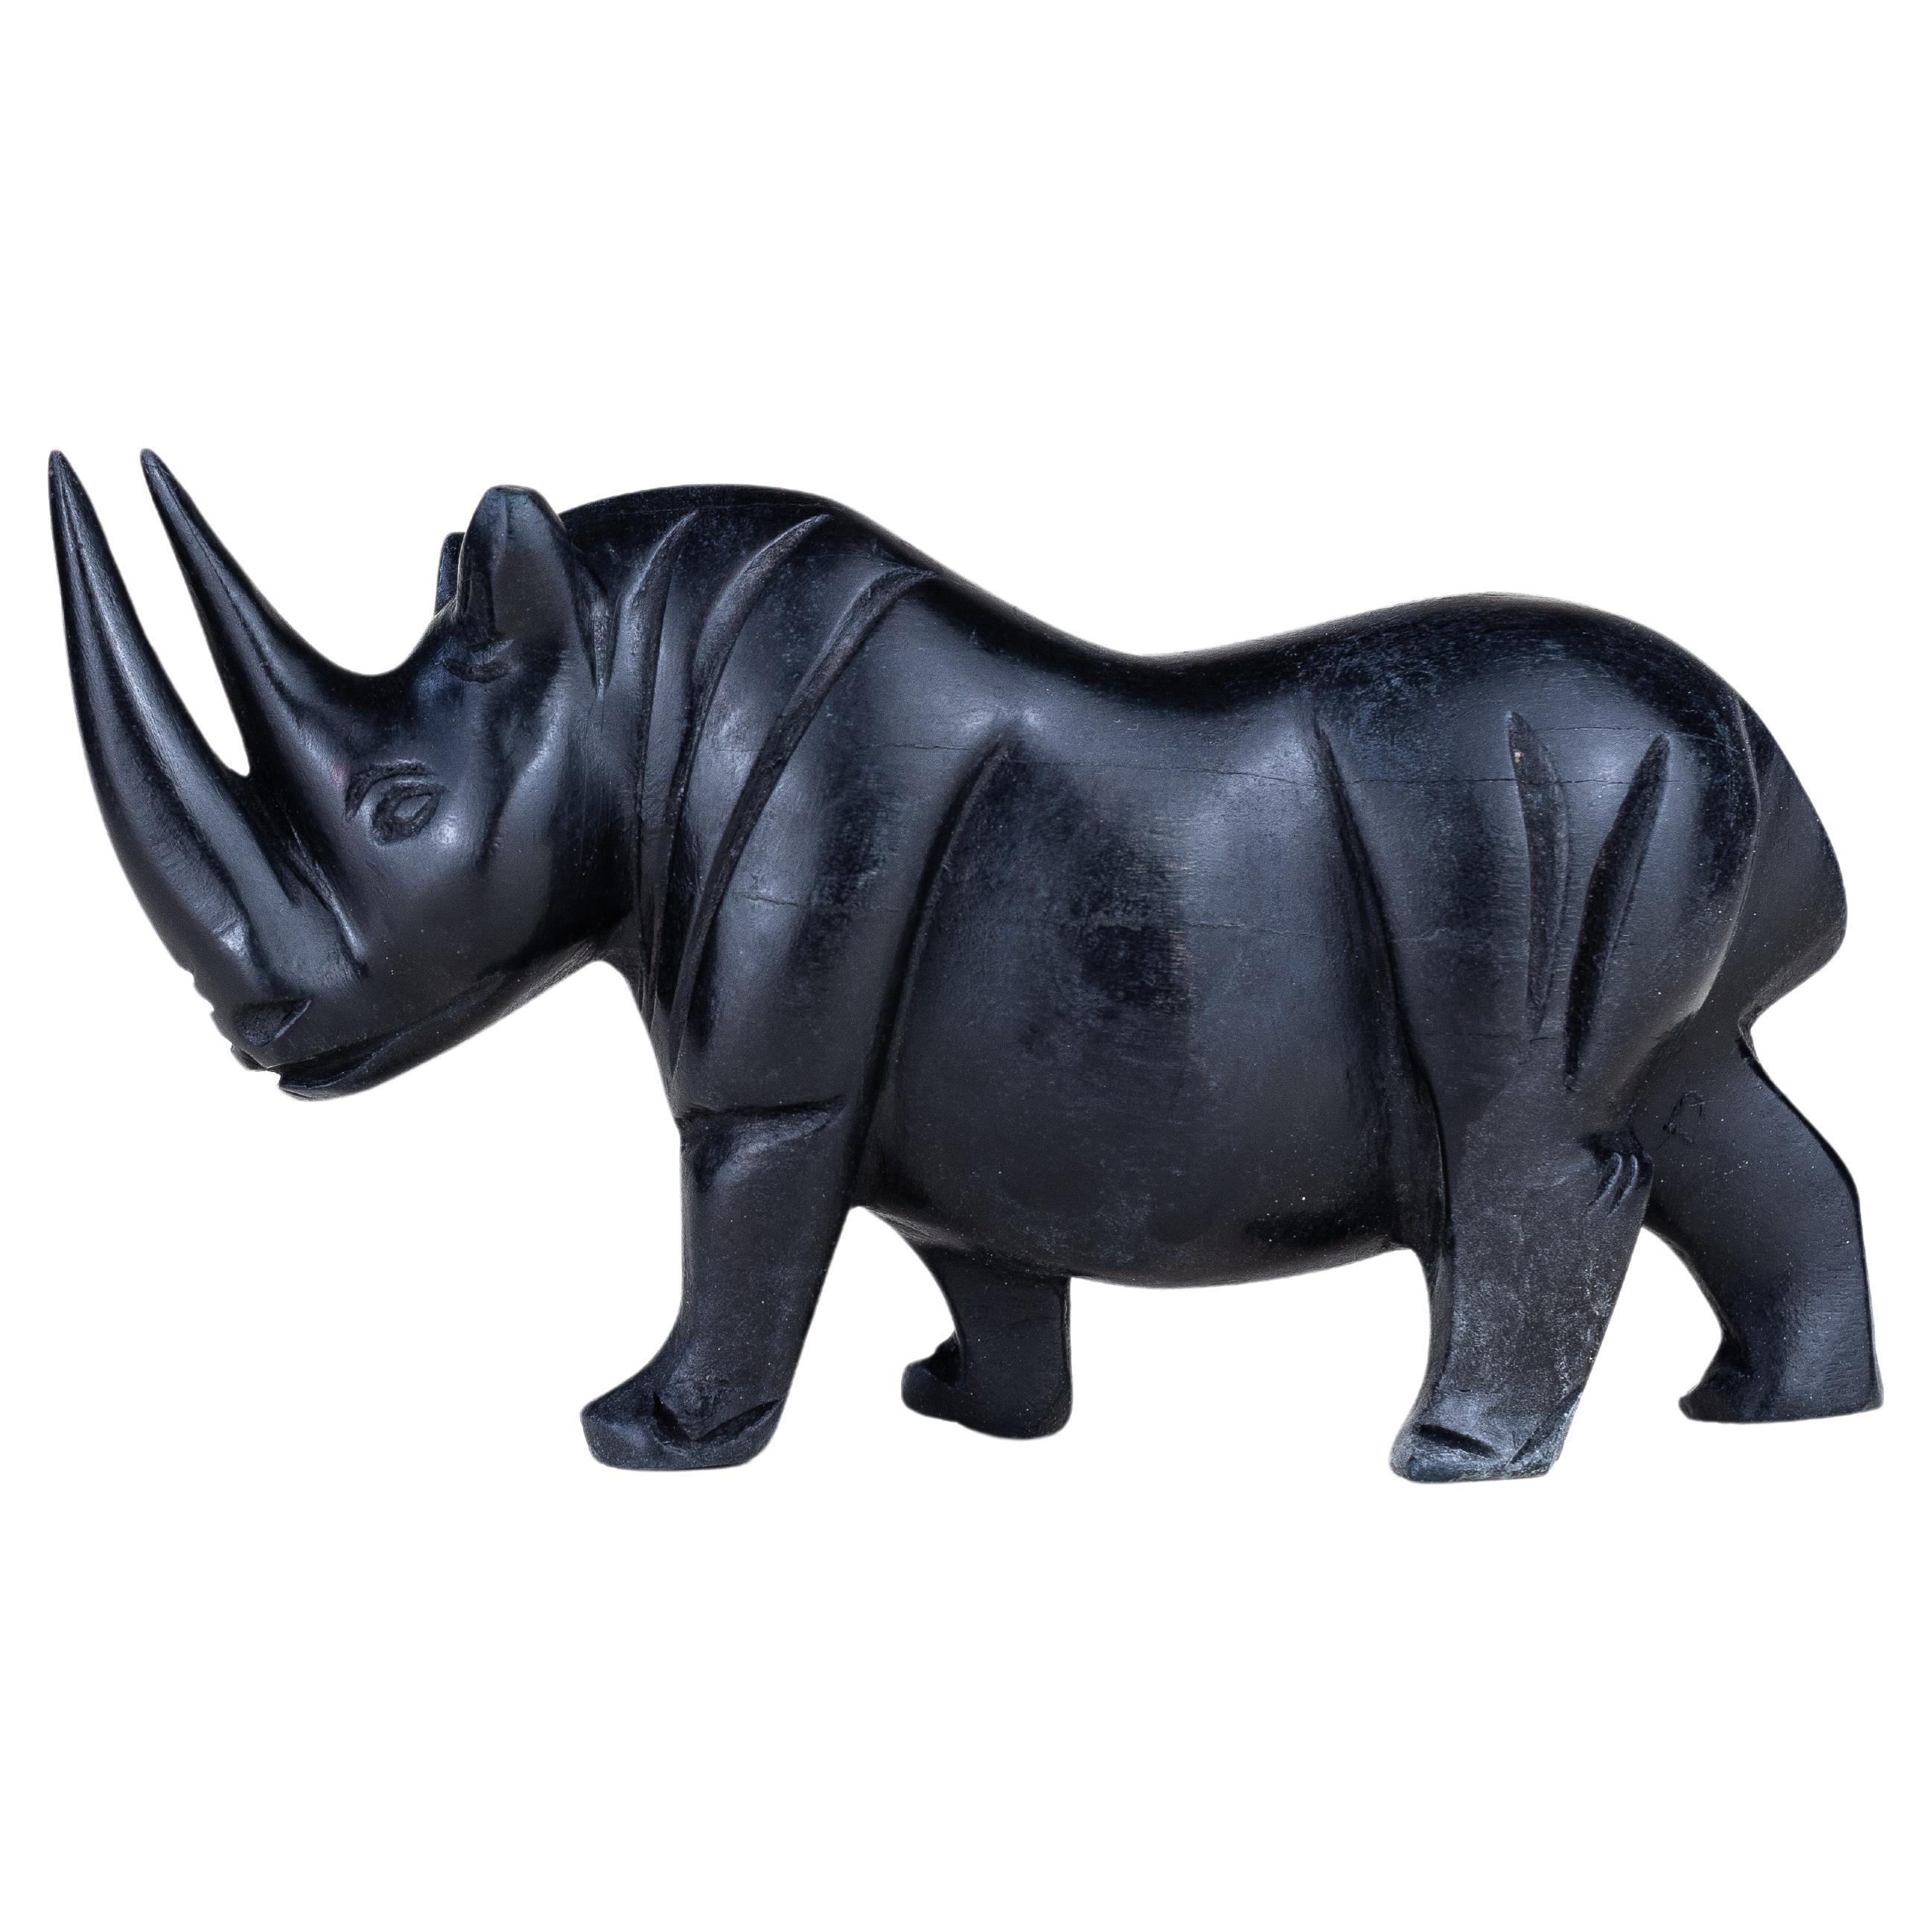 Ebonized Rhinoceros Wood sculpture For Sale